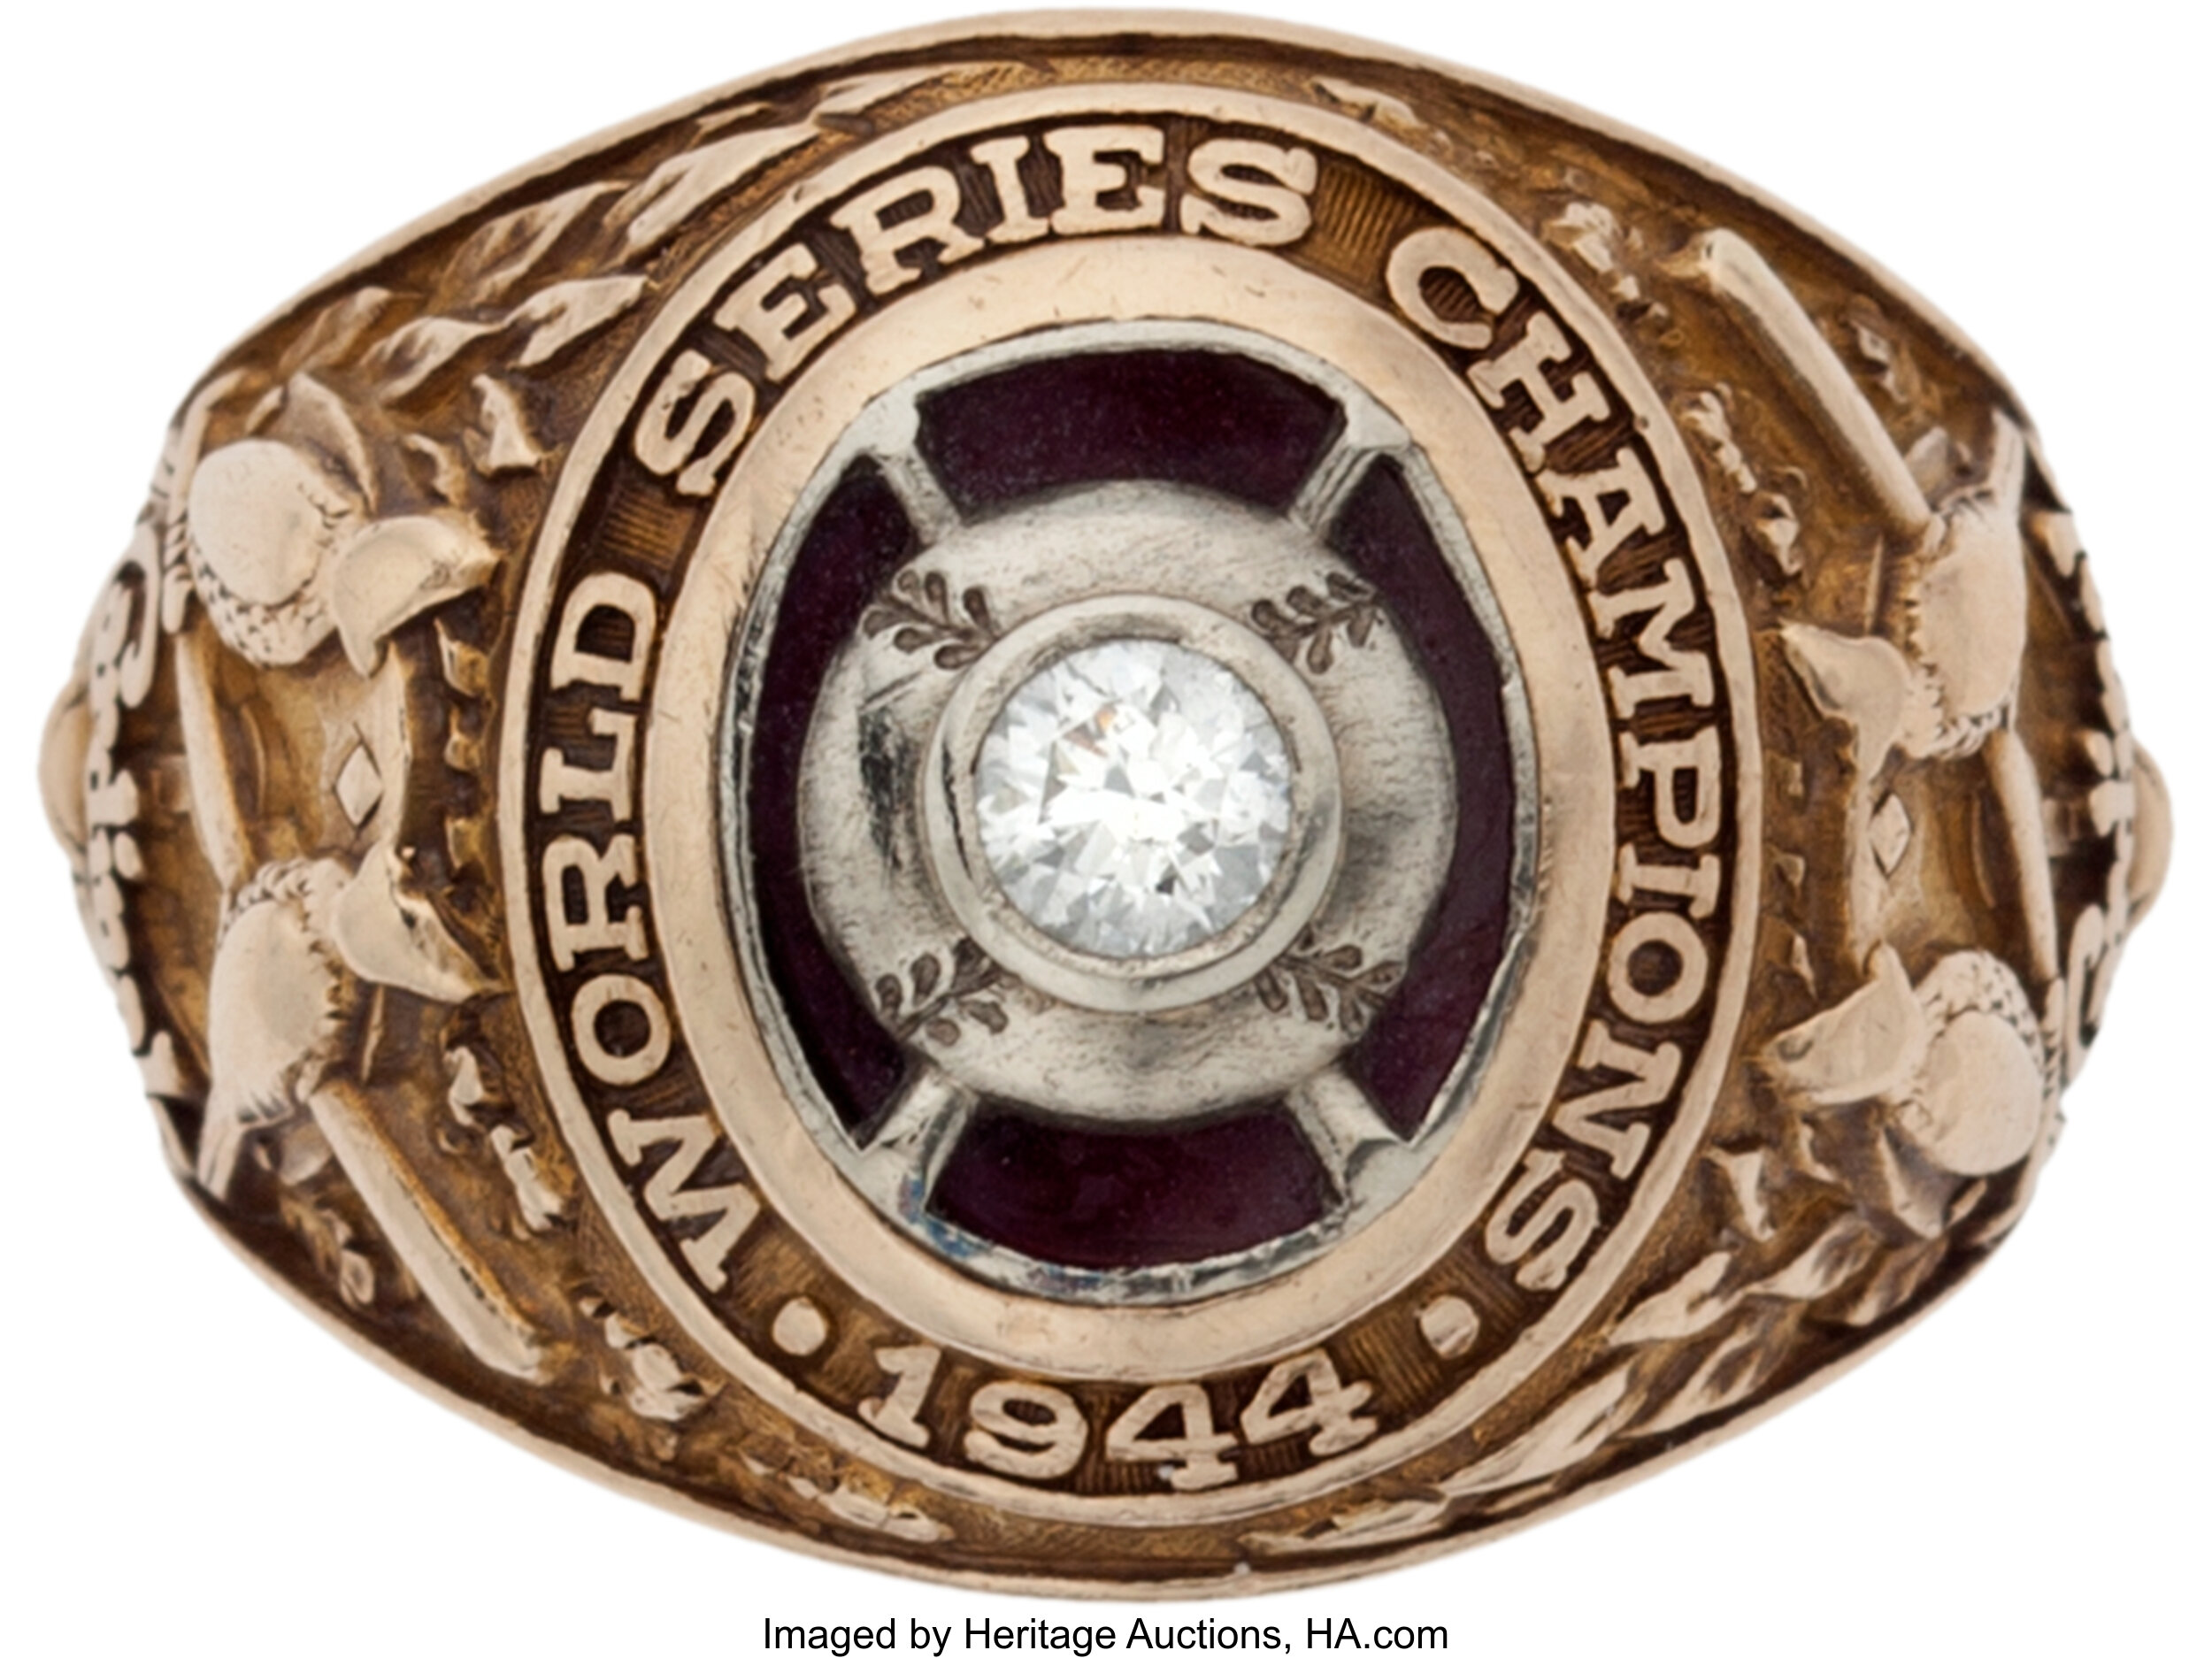 Scotsman Auction Co. - Lot #1 - 10K Yellow Gold St. Louis Cardinals Ring